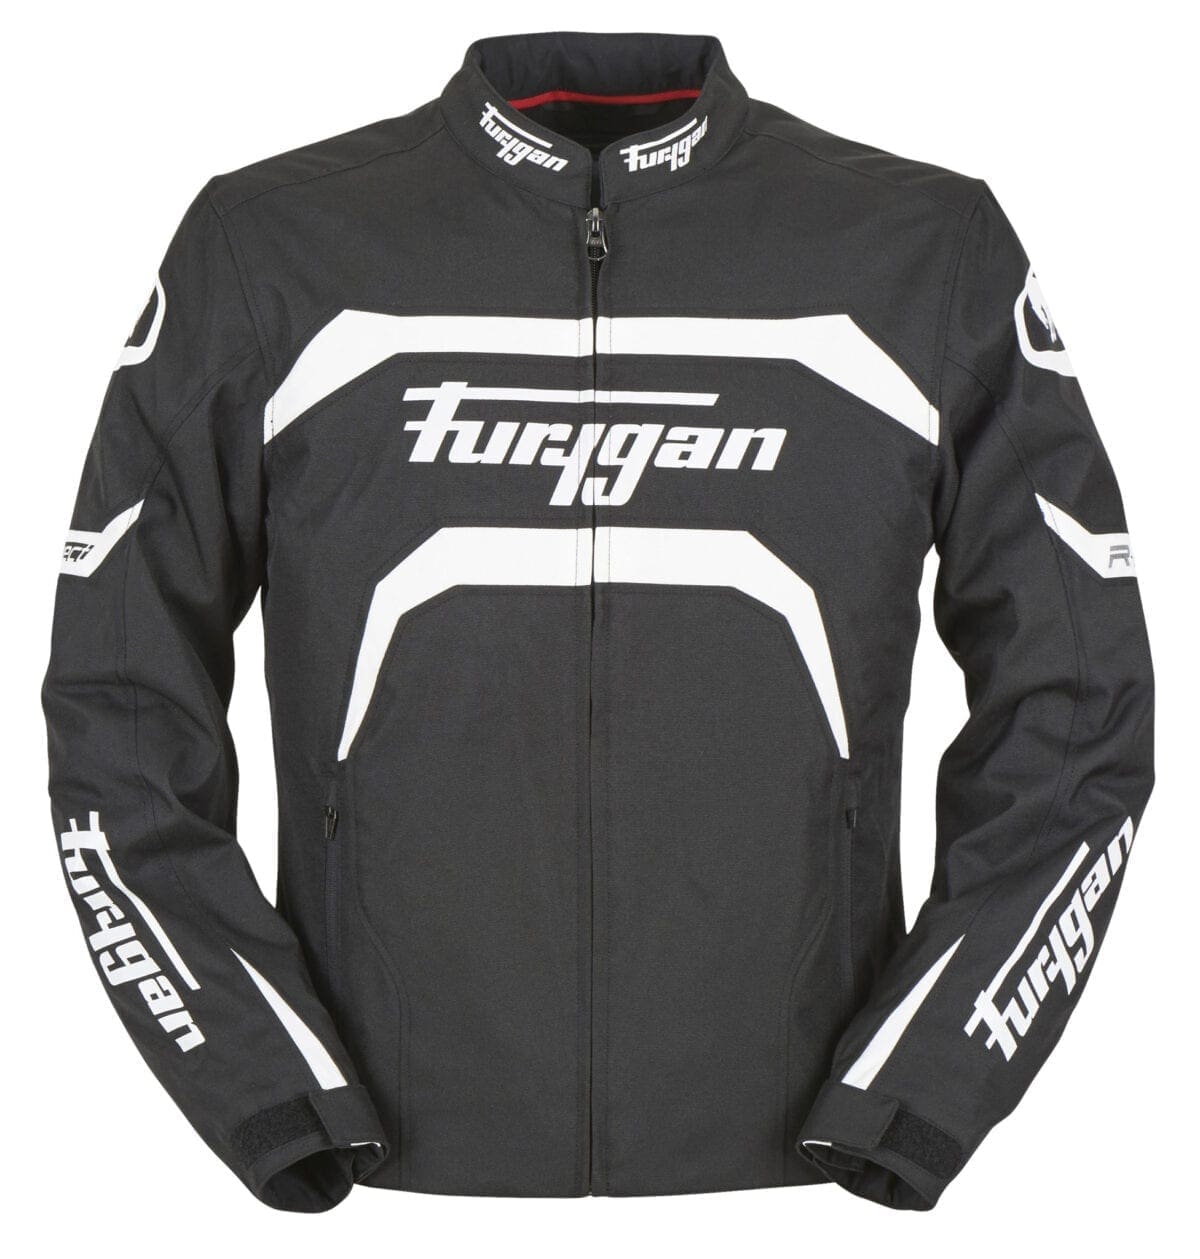 Furygan launch new range of Autumn/Winter textile jackets